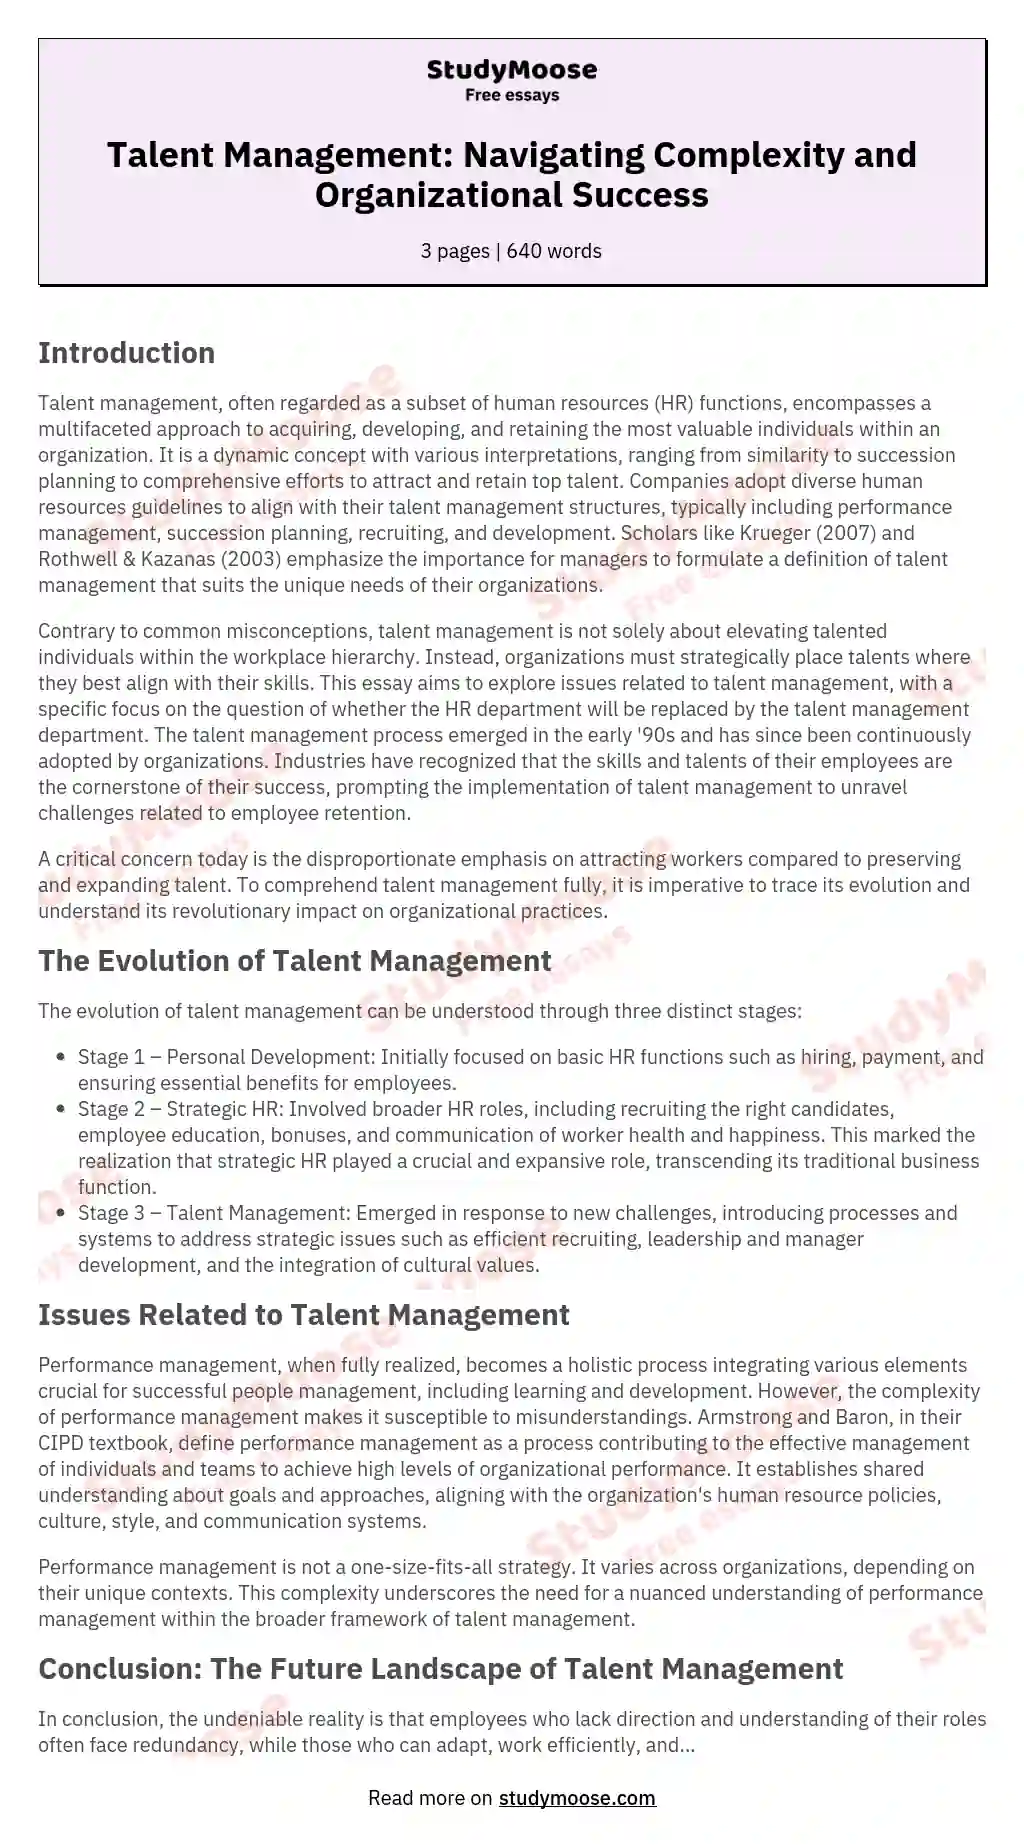 Talent Management: Navigating Complexity and Organizational Success essay